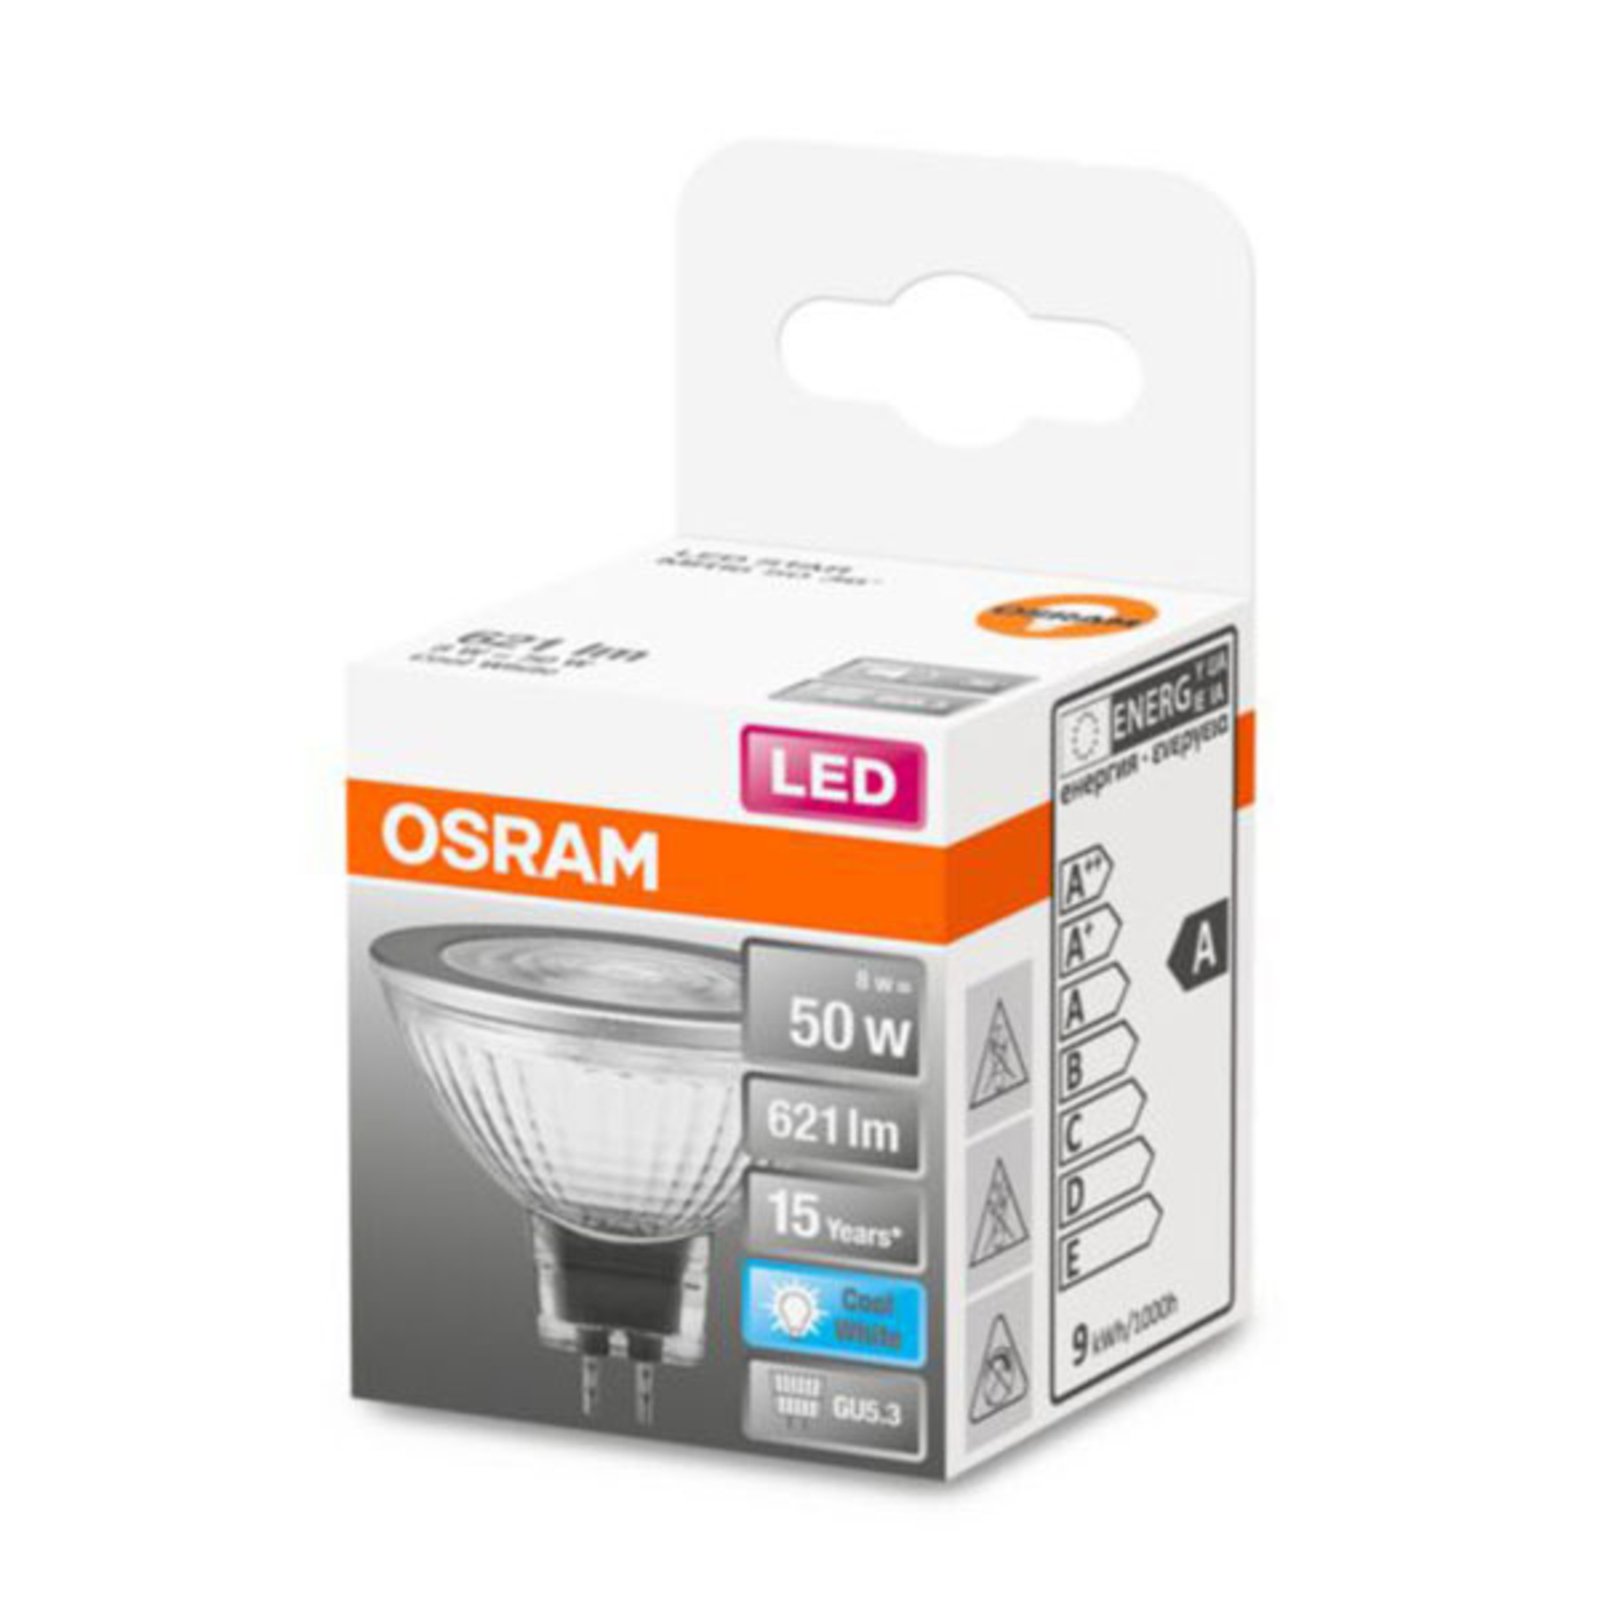 OSRAM Star reflector LED GU5.3 6.5W cool white